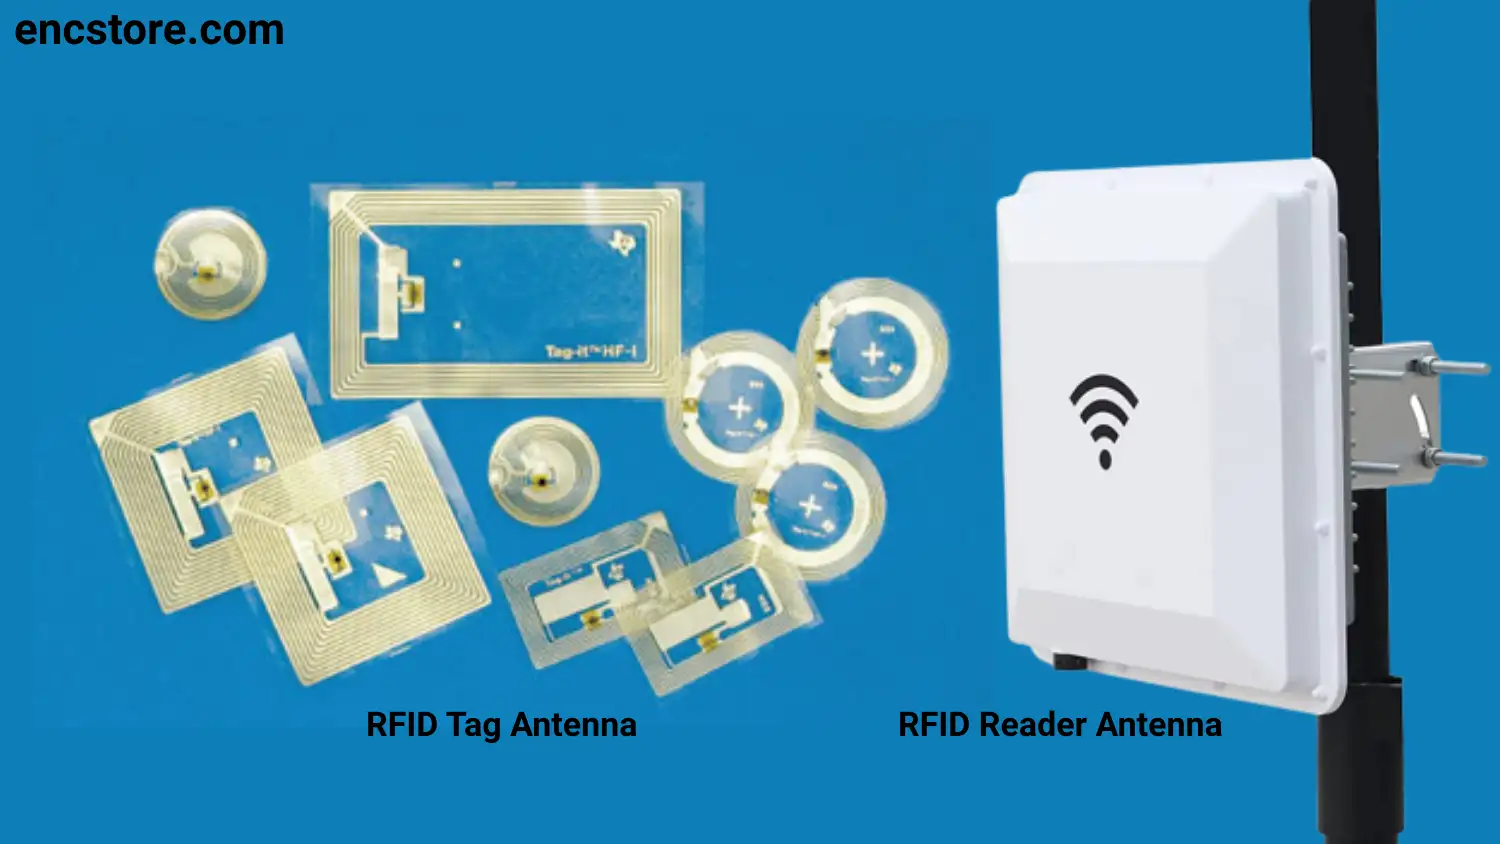 RFID Antennas Work